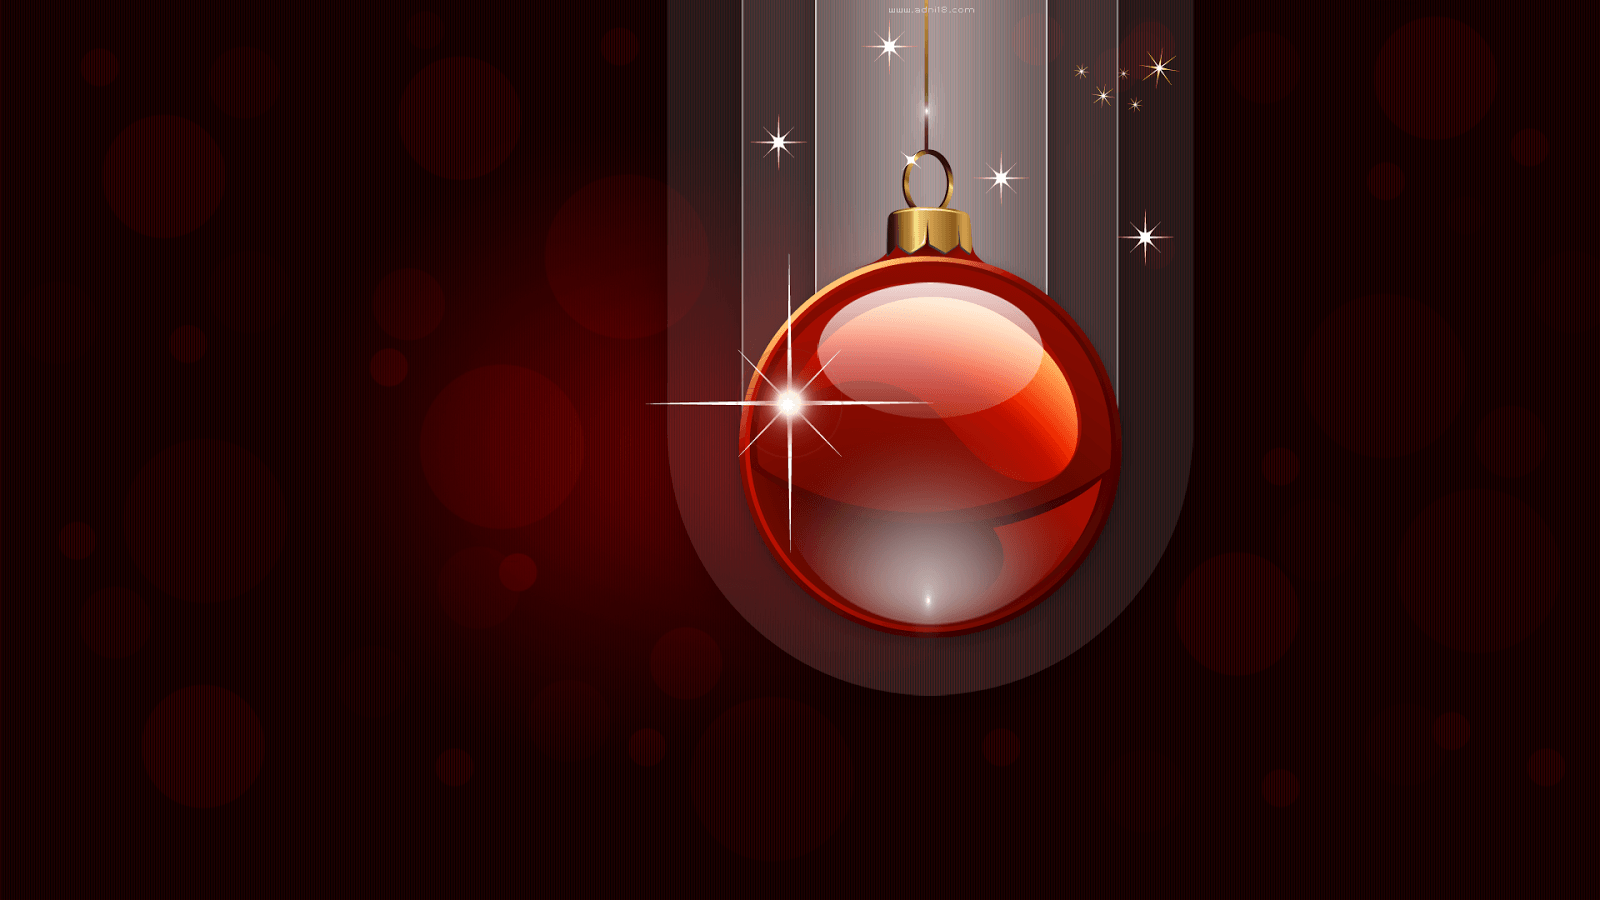 Merry Christmas 2015 Wallpaper HD pics Download Wallpaper